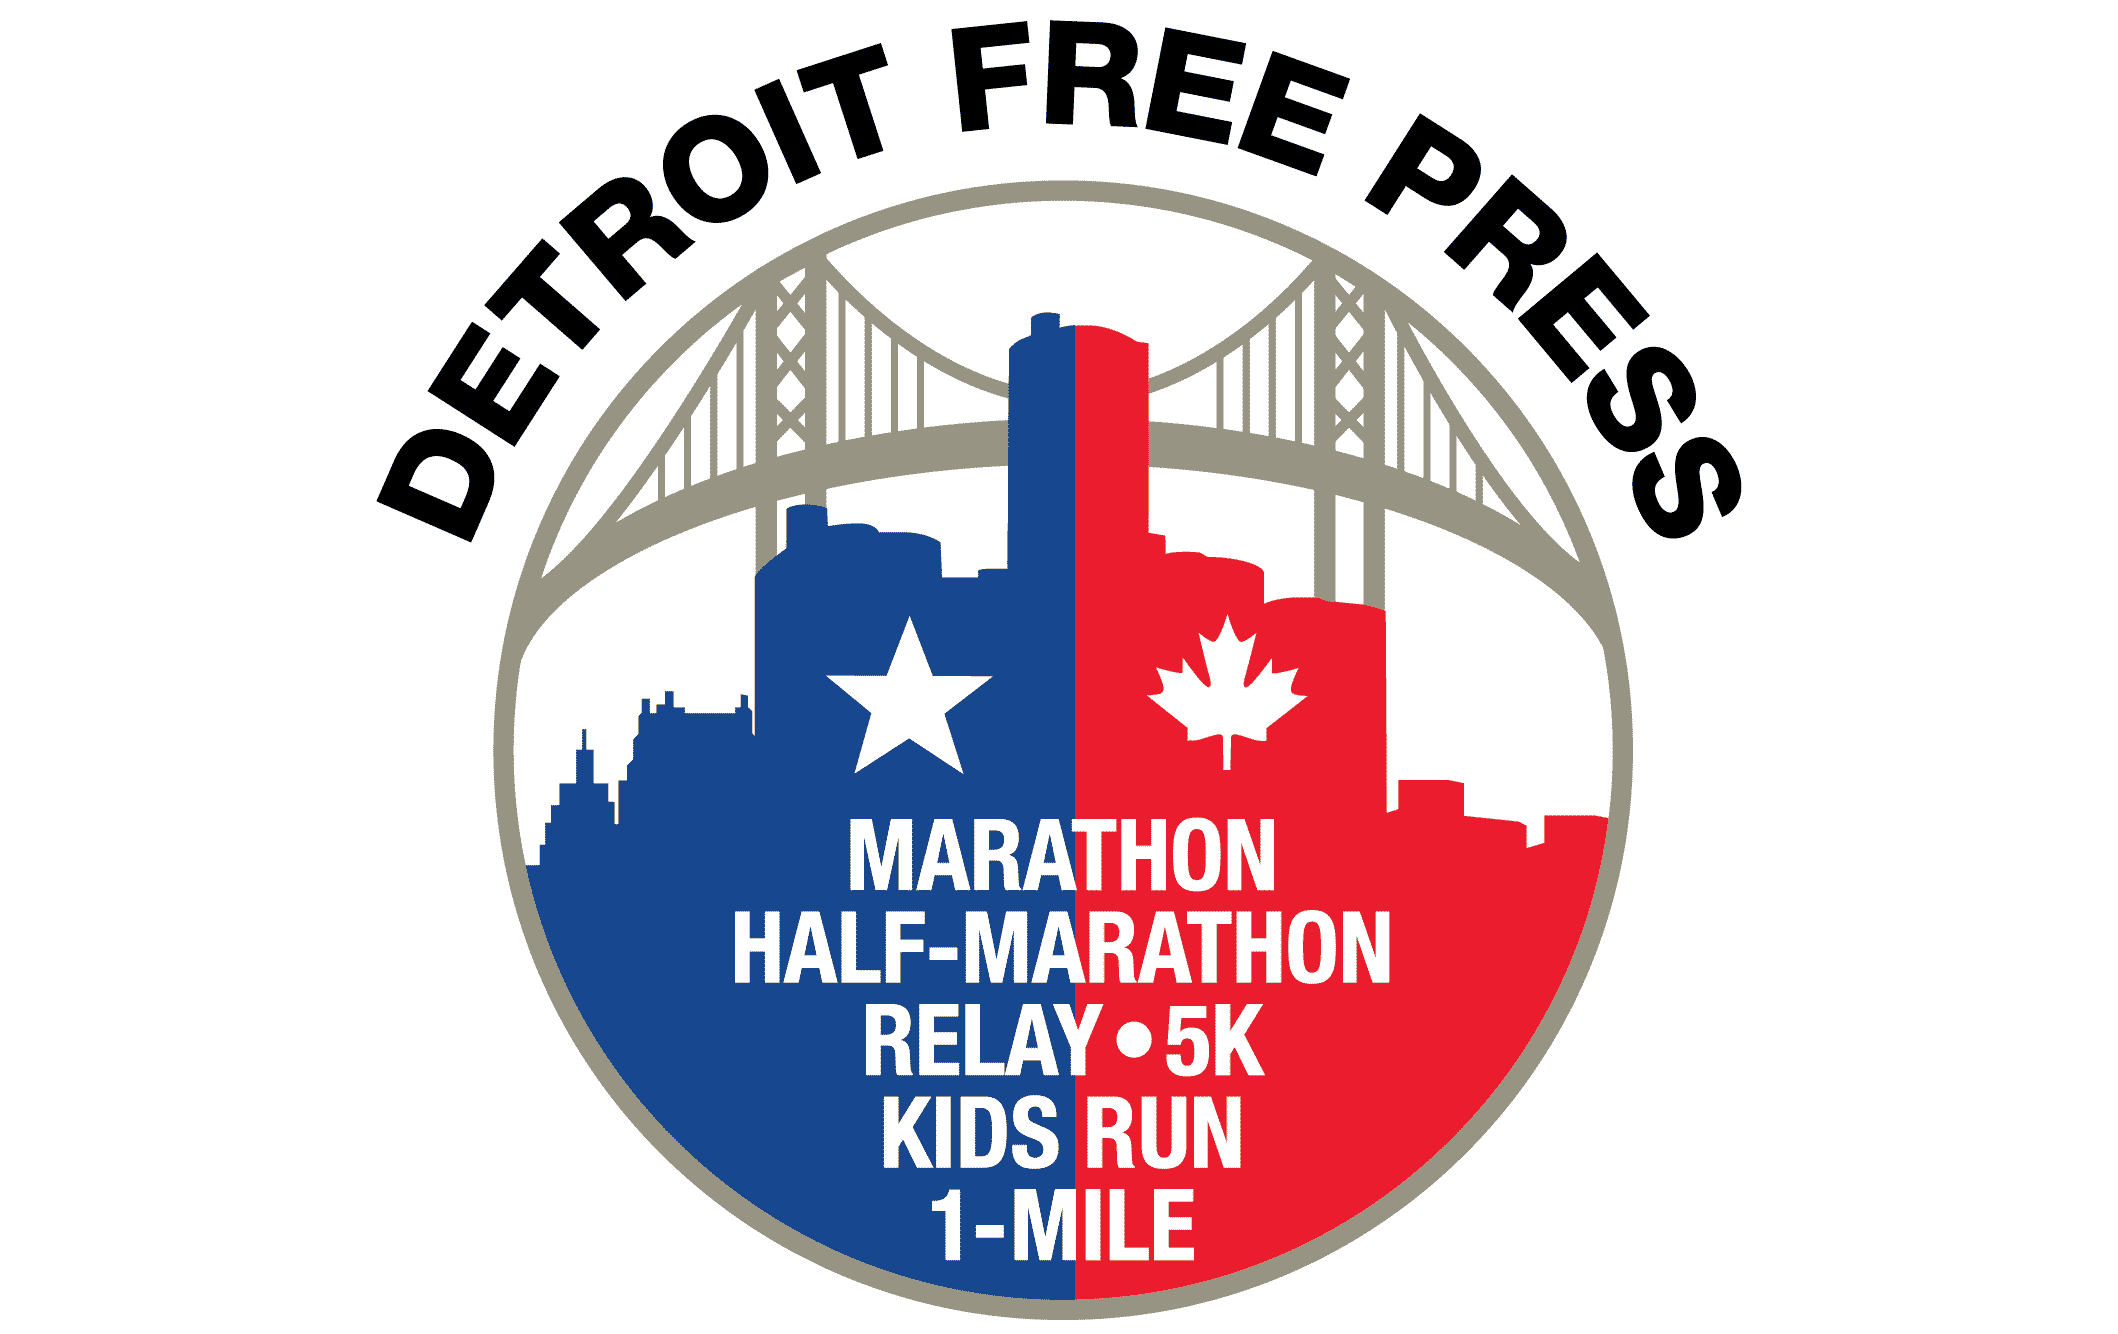 website_logos-detroit-free-press-marathon